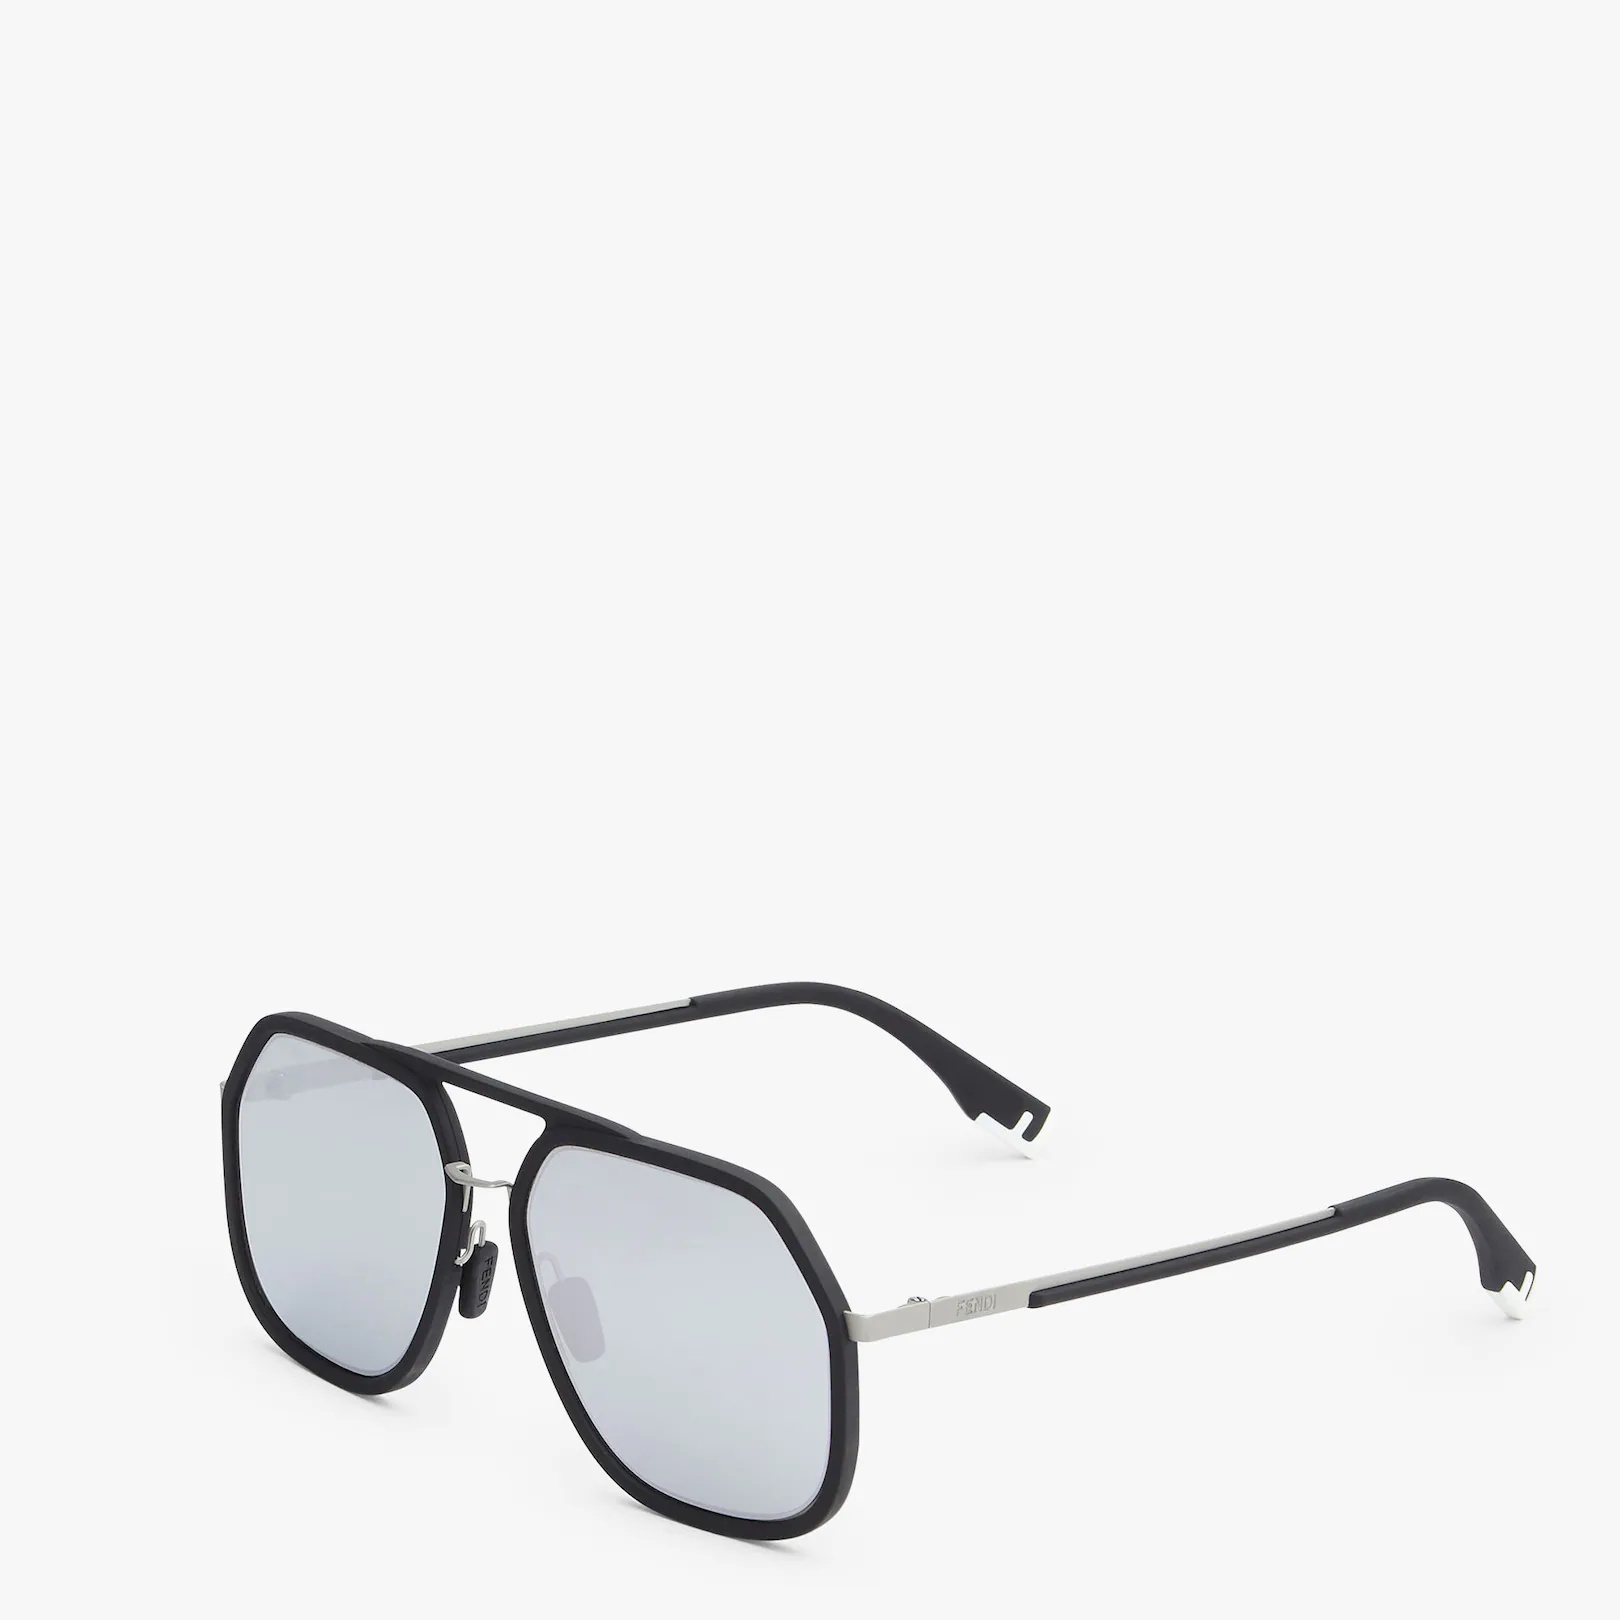 Black sunglasses - 2